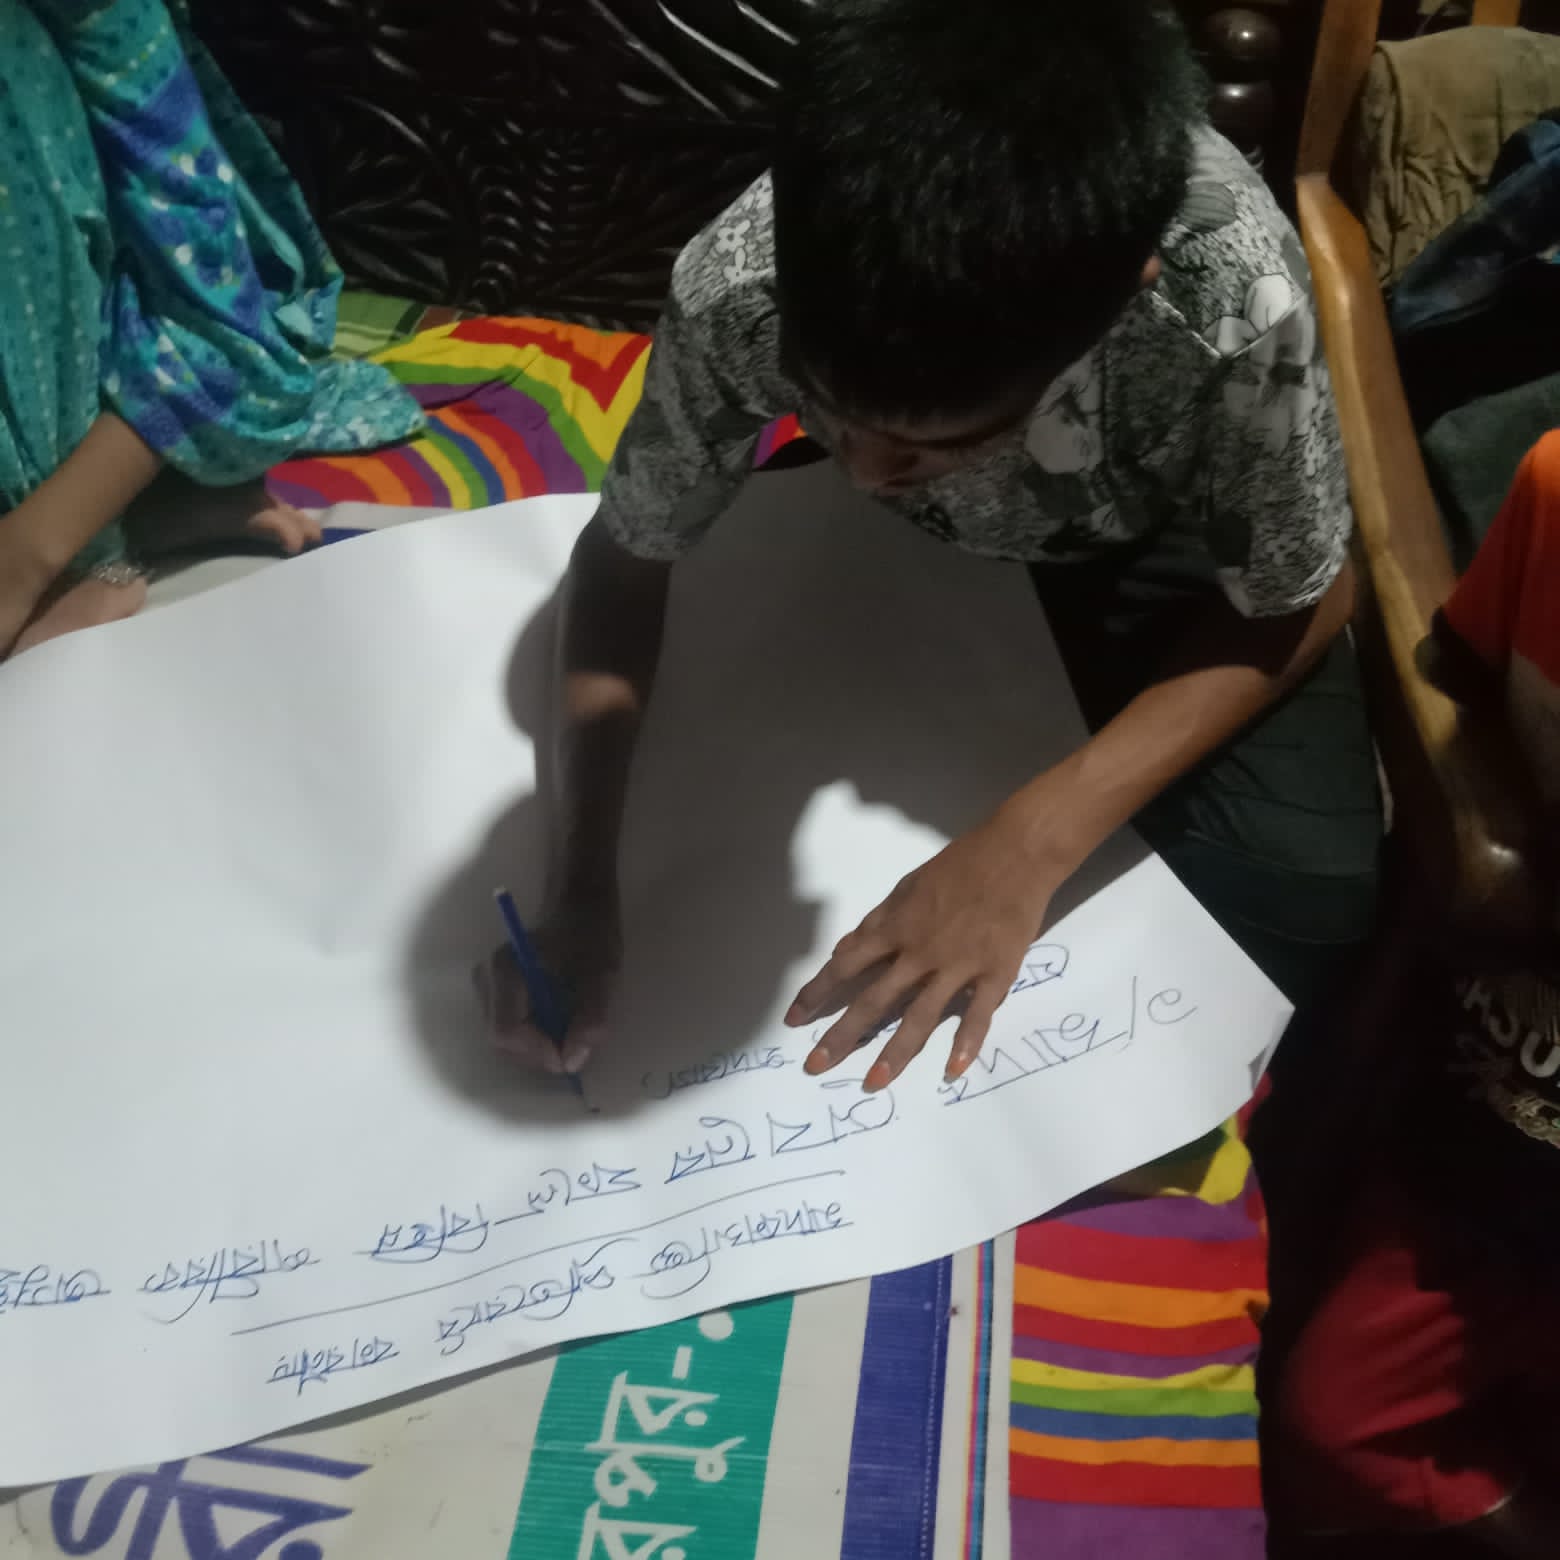 Monir making a poster on drug awareness